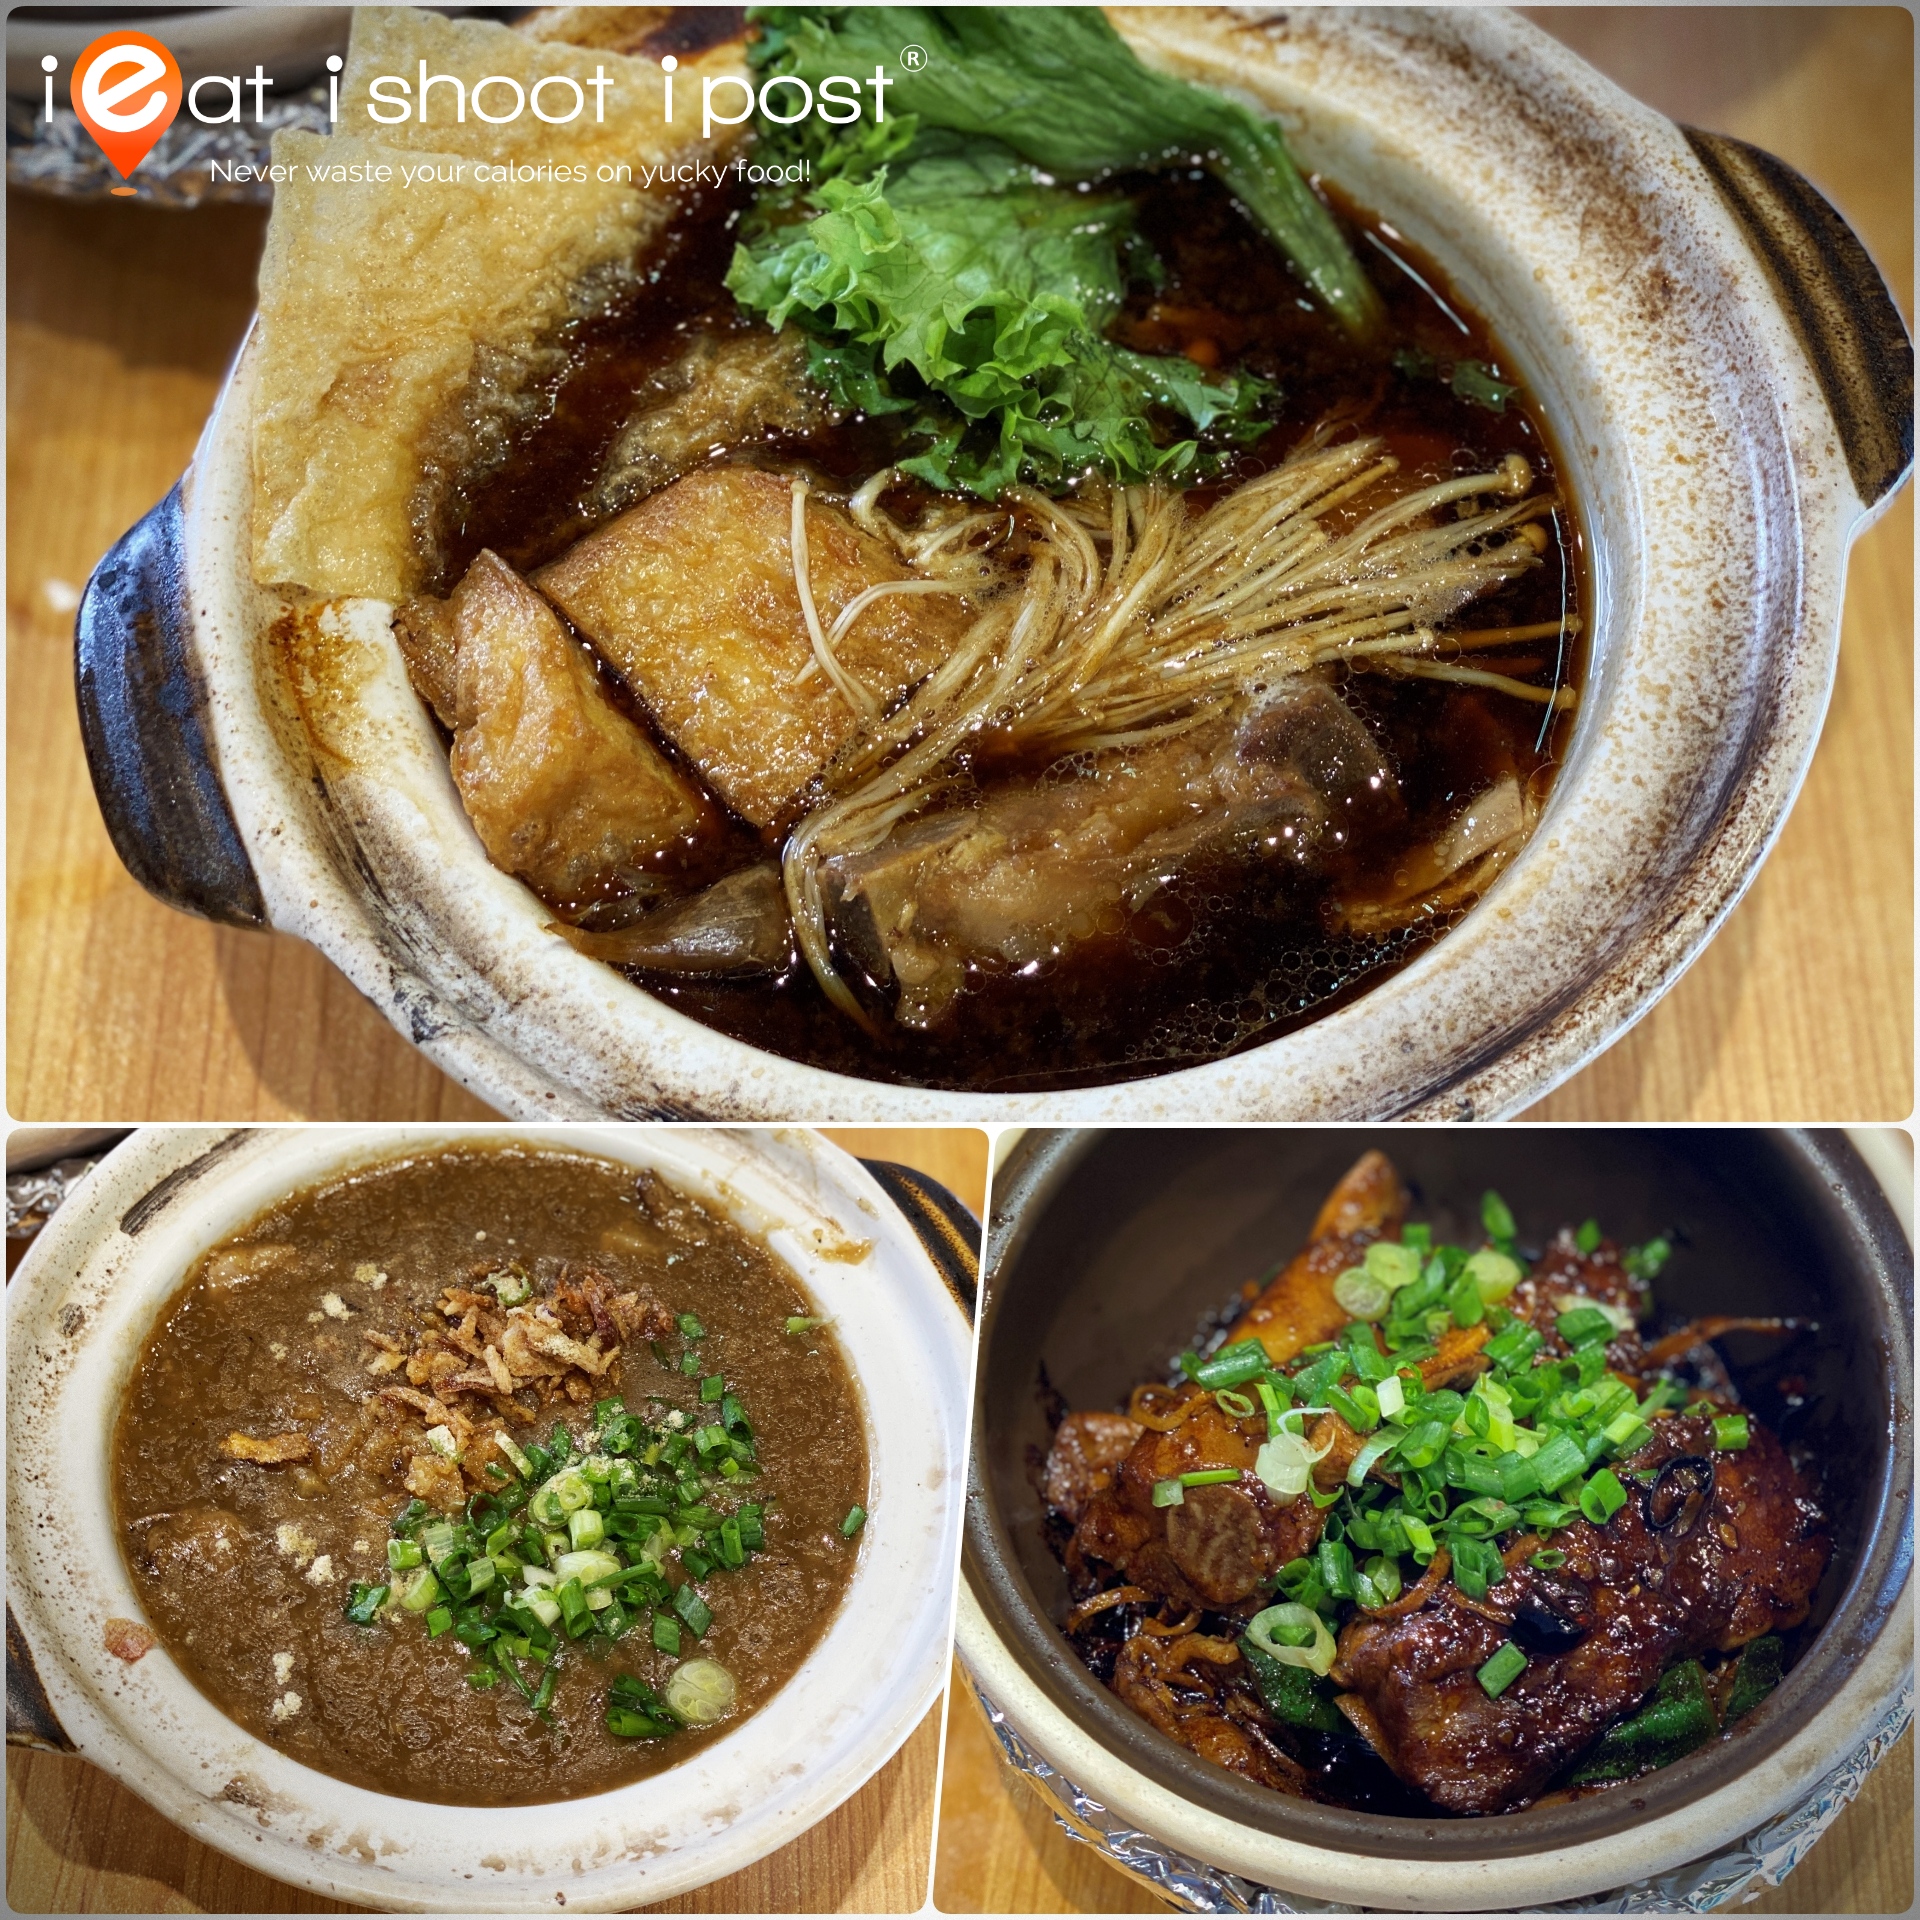 Feng Xiang Bak Kut Teh - Klang Herbal Bak Kut Teh, Dry Bak Kut Teh and Sliced Pork Fried Porridge